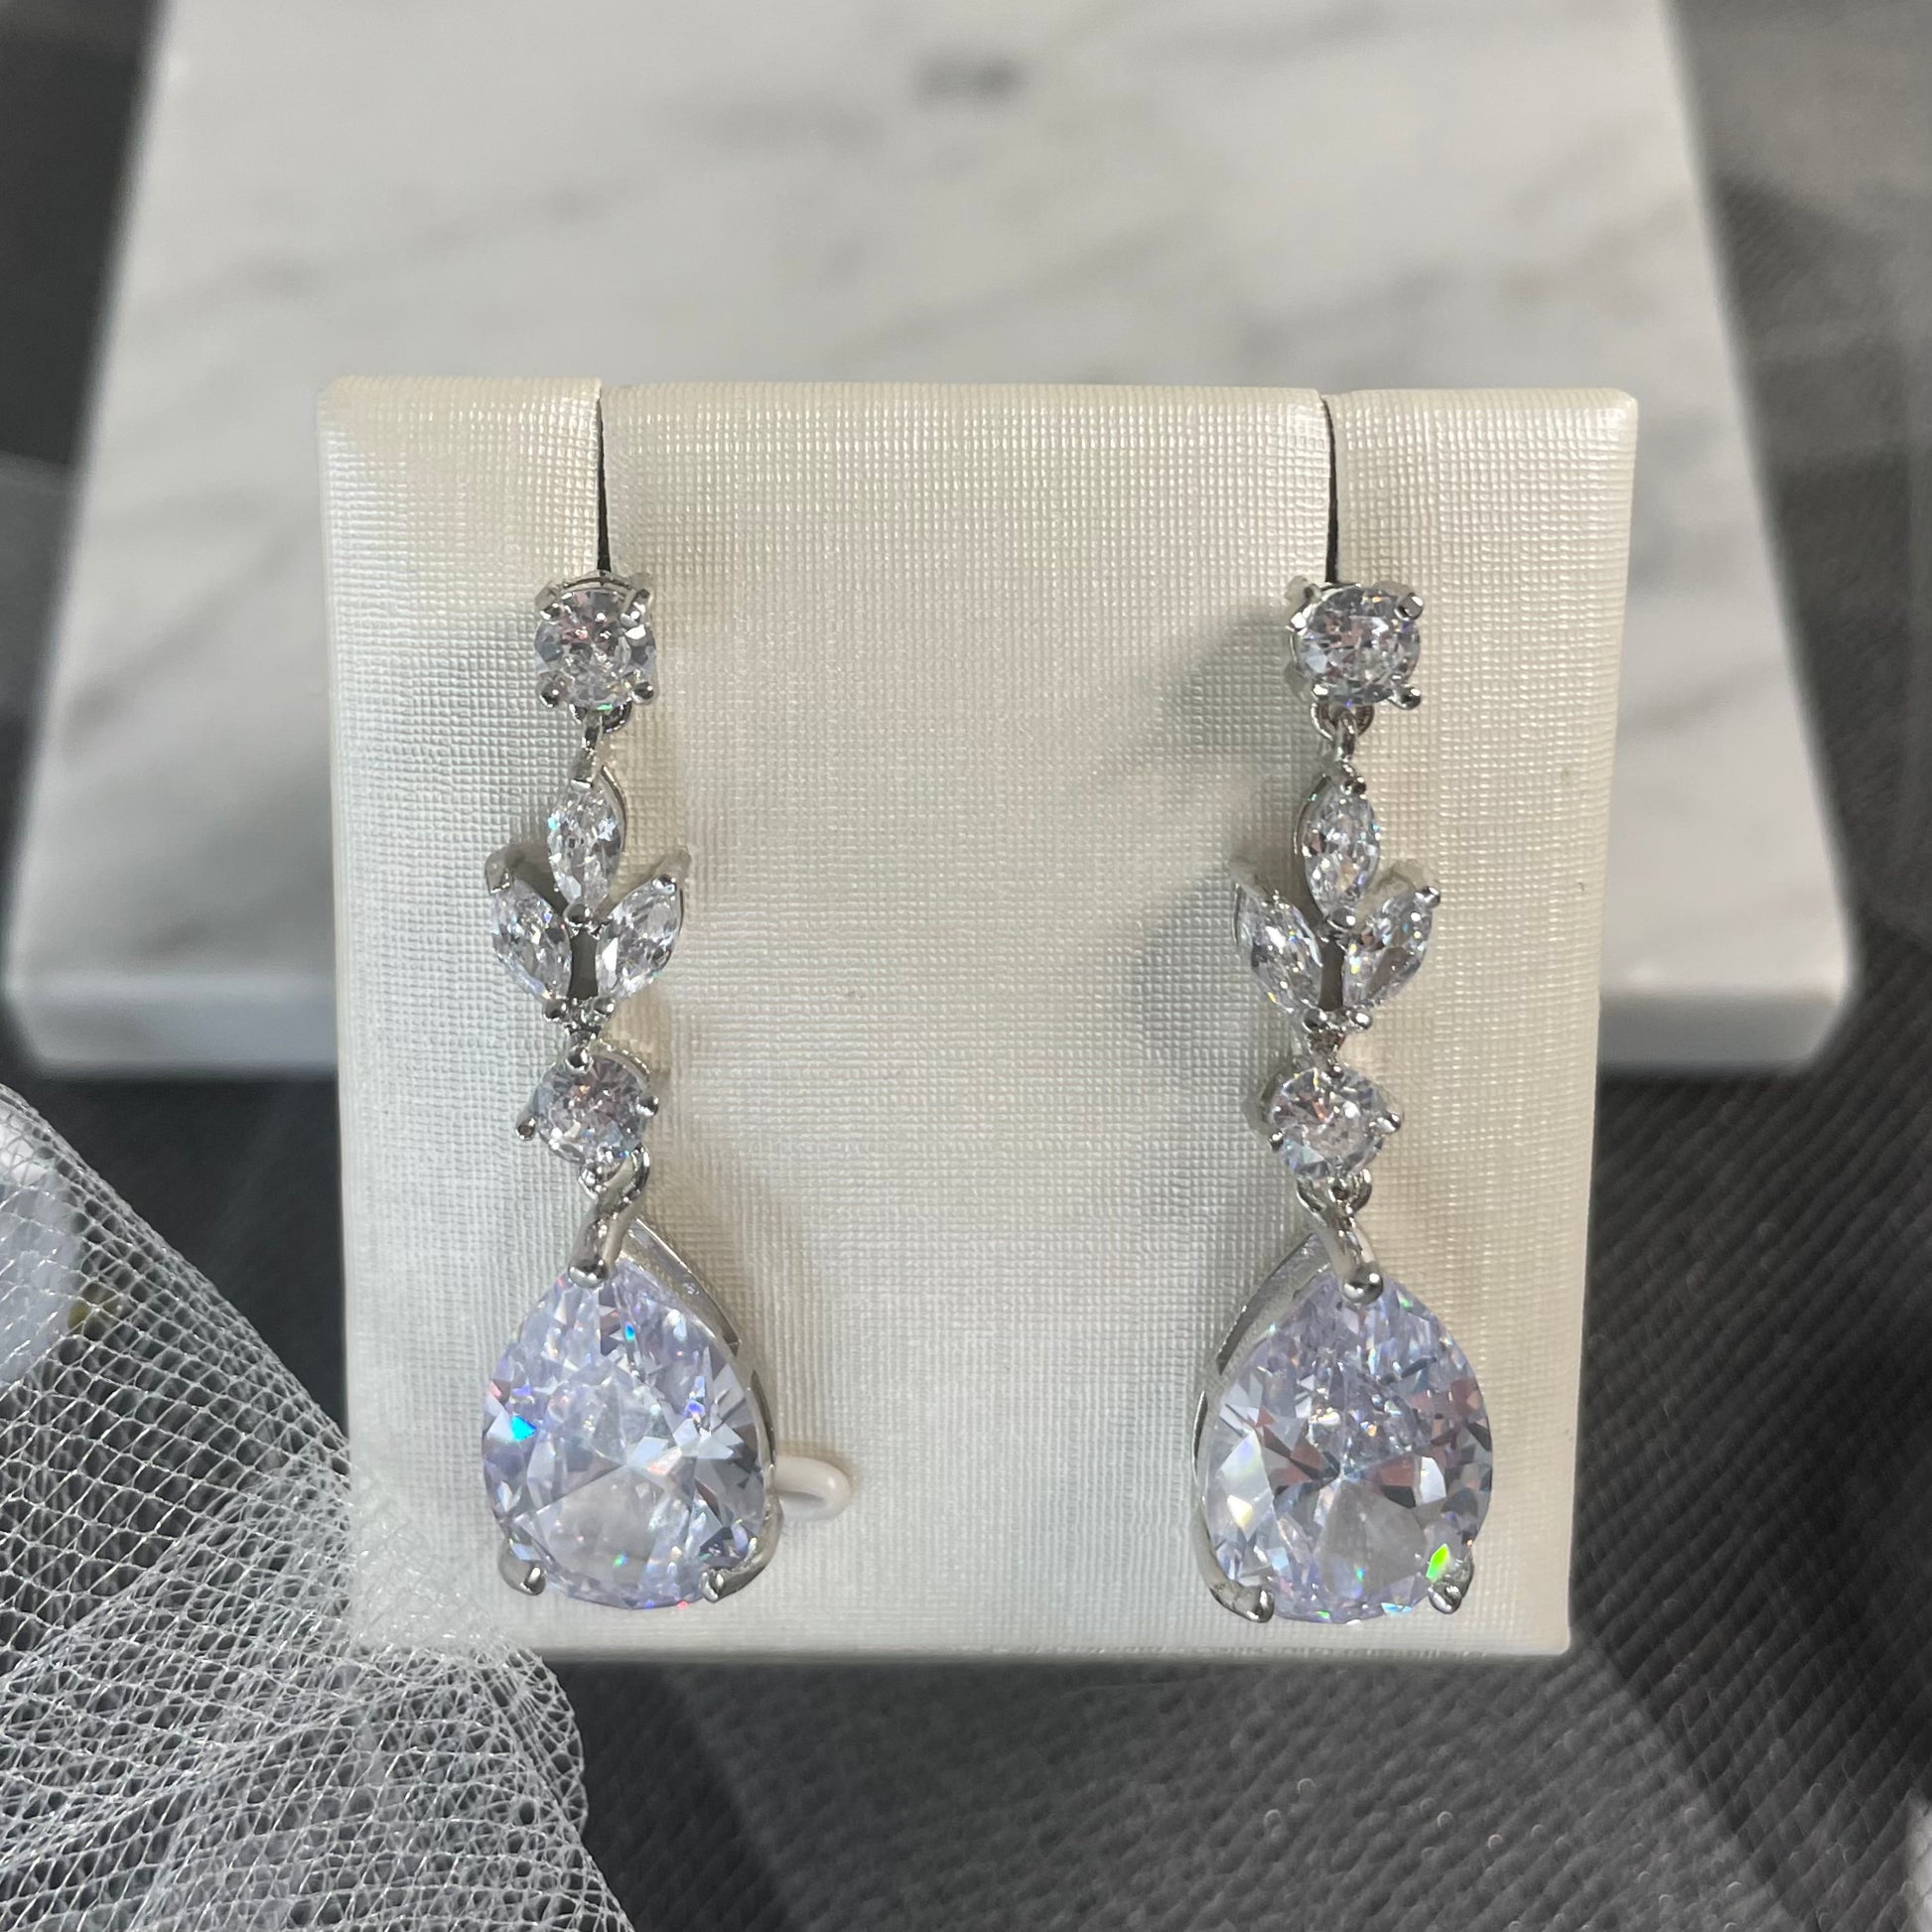 Hana Bridal Wedding Earrings with Dazzling Water Drop Crystals - Divine Bridal